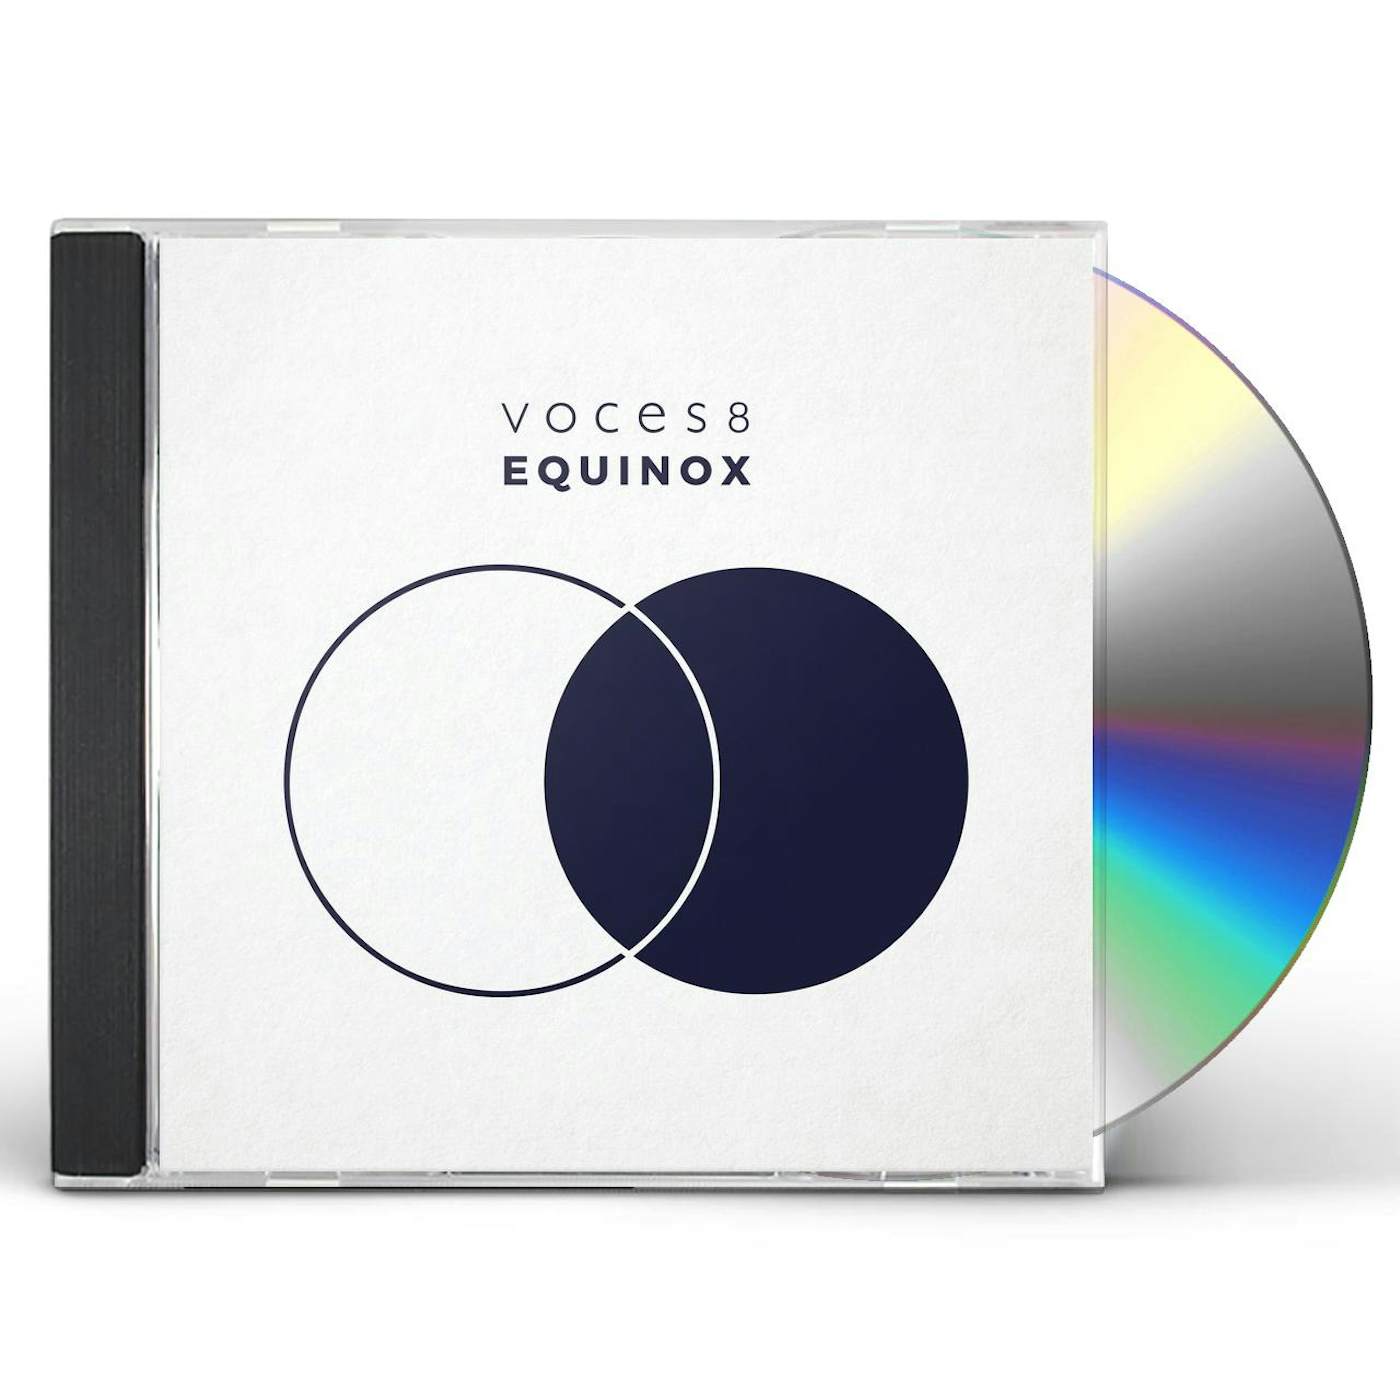 Voces8 EQUINOX CD